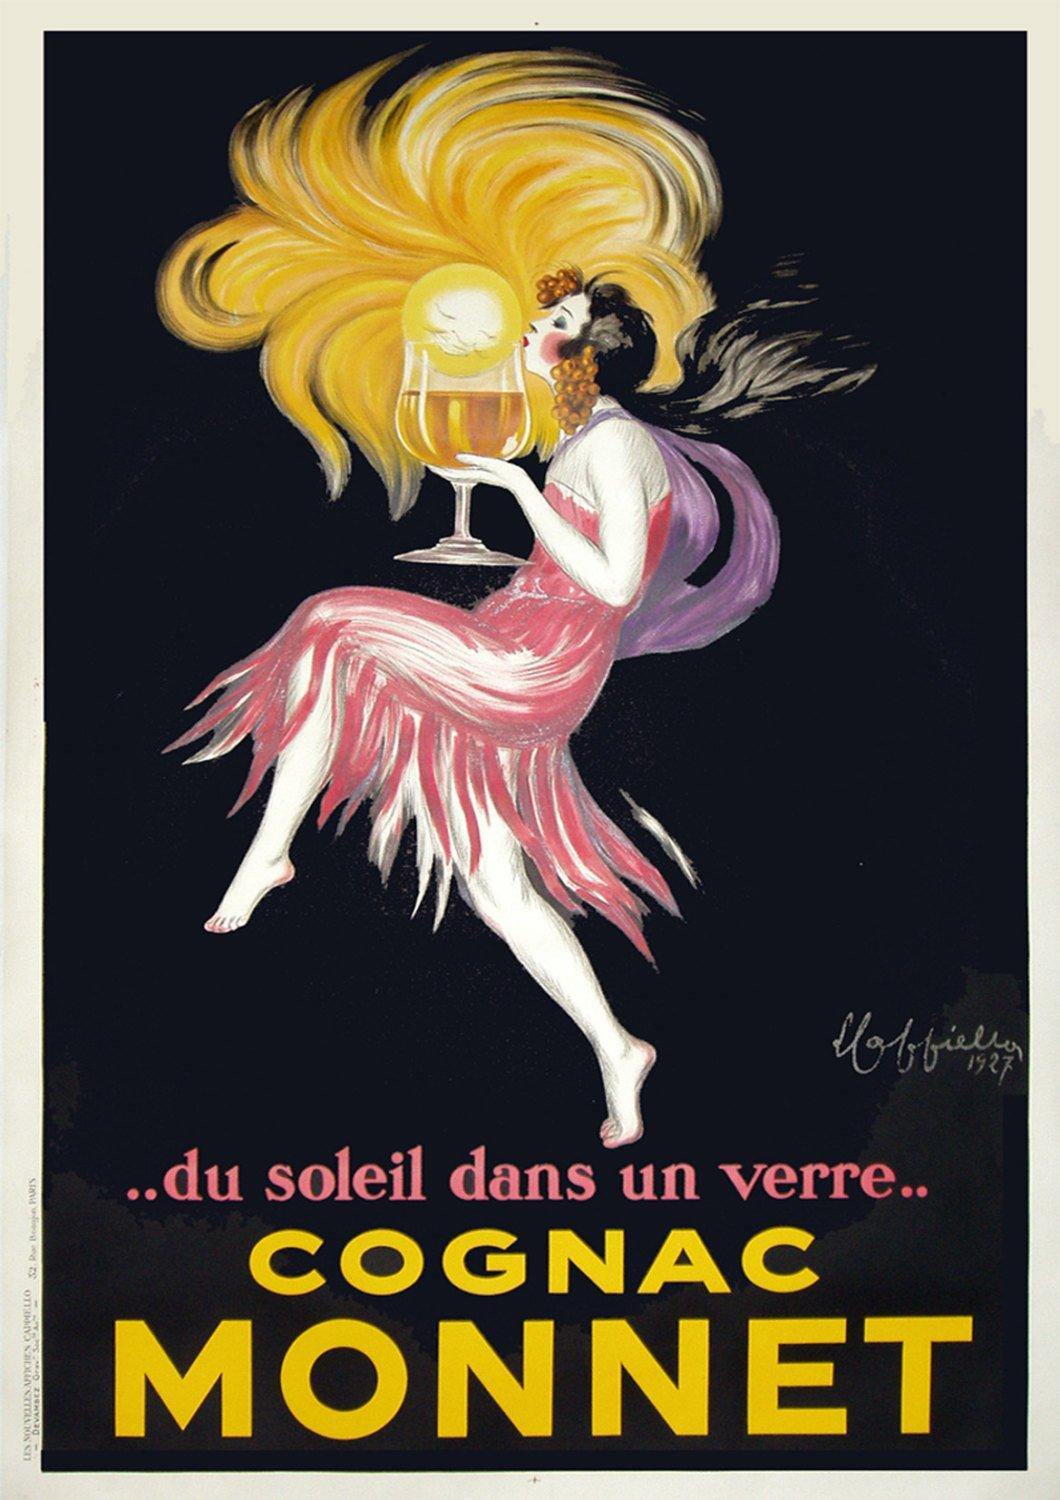 COGNAC POSTER: Vintage French Monnet Brandy Advert - Pimlico Prints